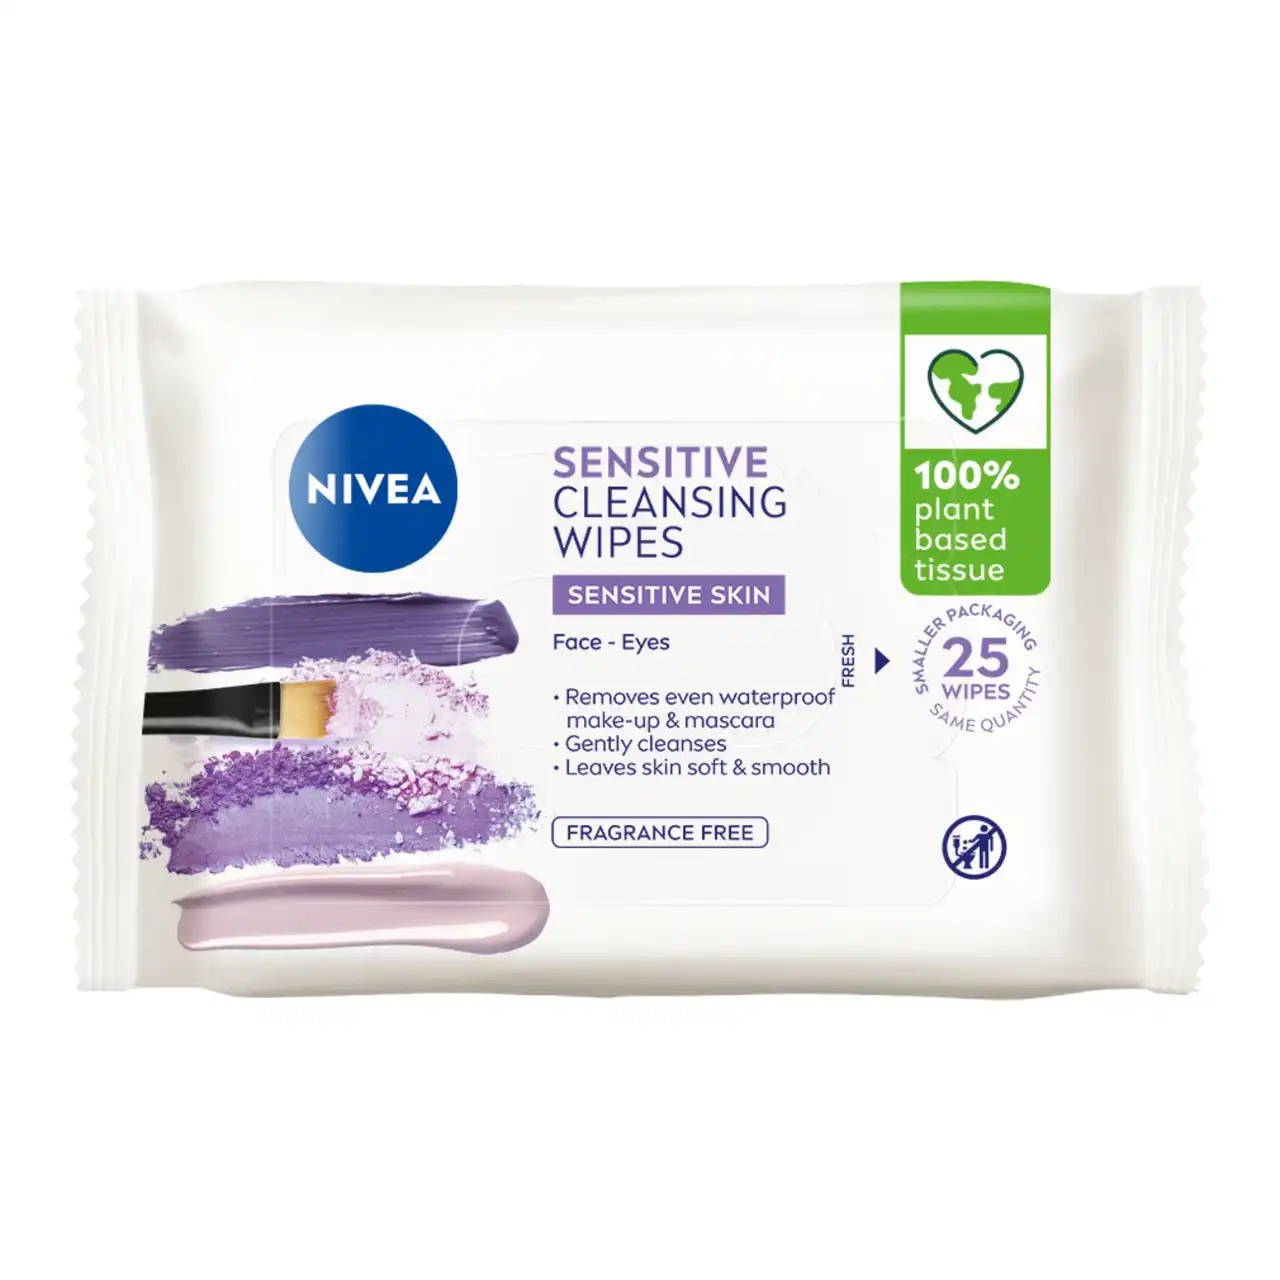 Nivea Sensitive Biodegradable Cleansing Wipes for Sensitive Skin 25 pack